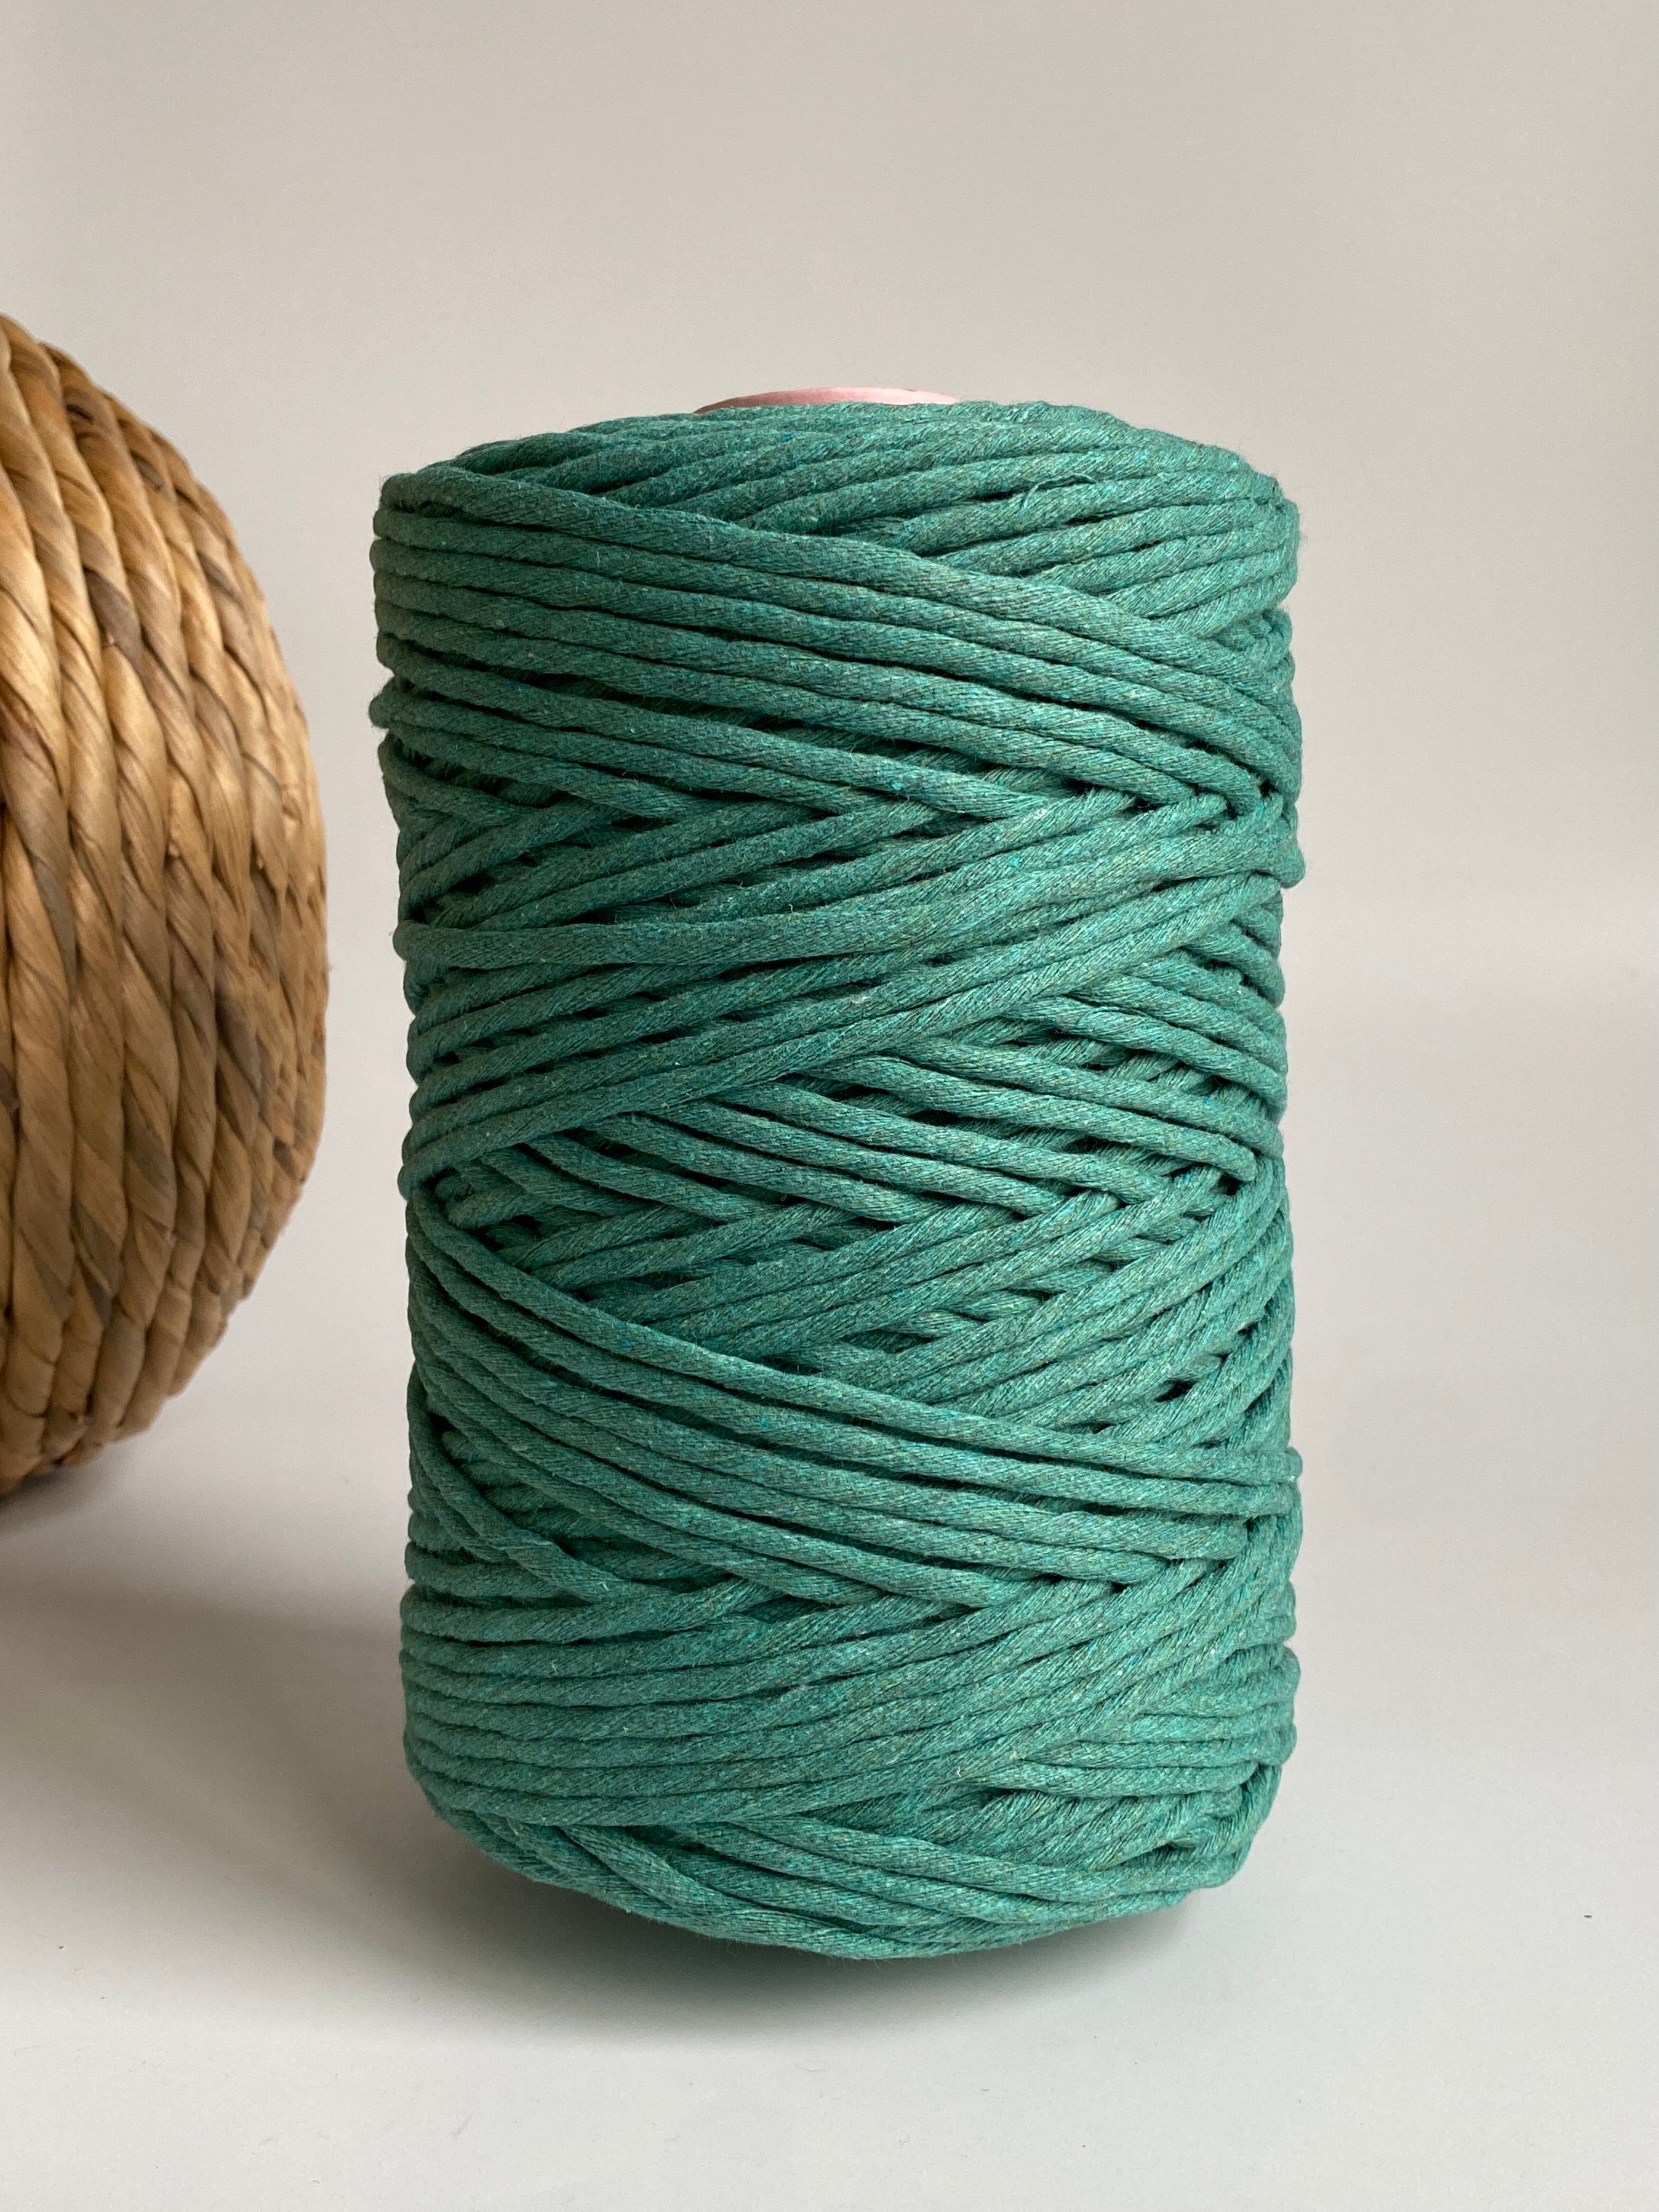 5mm Cotton Macramé String - 1kg - Sea Green